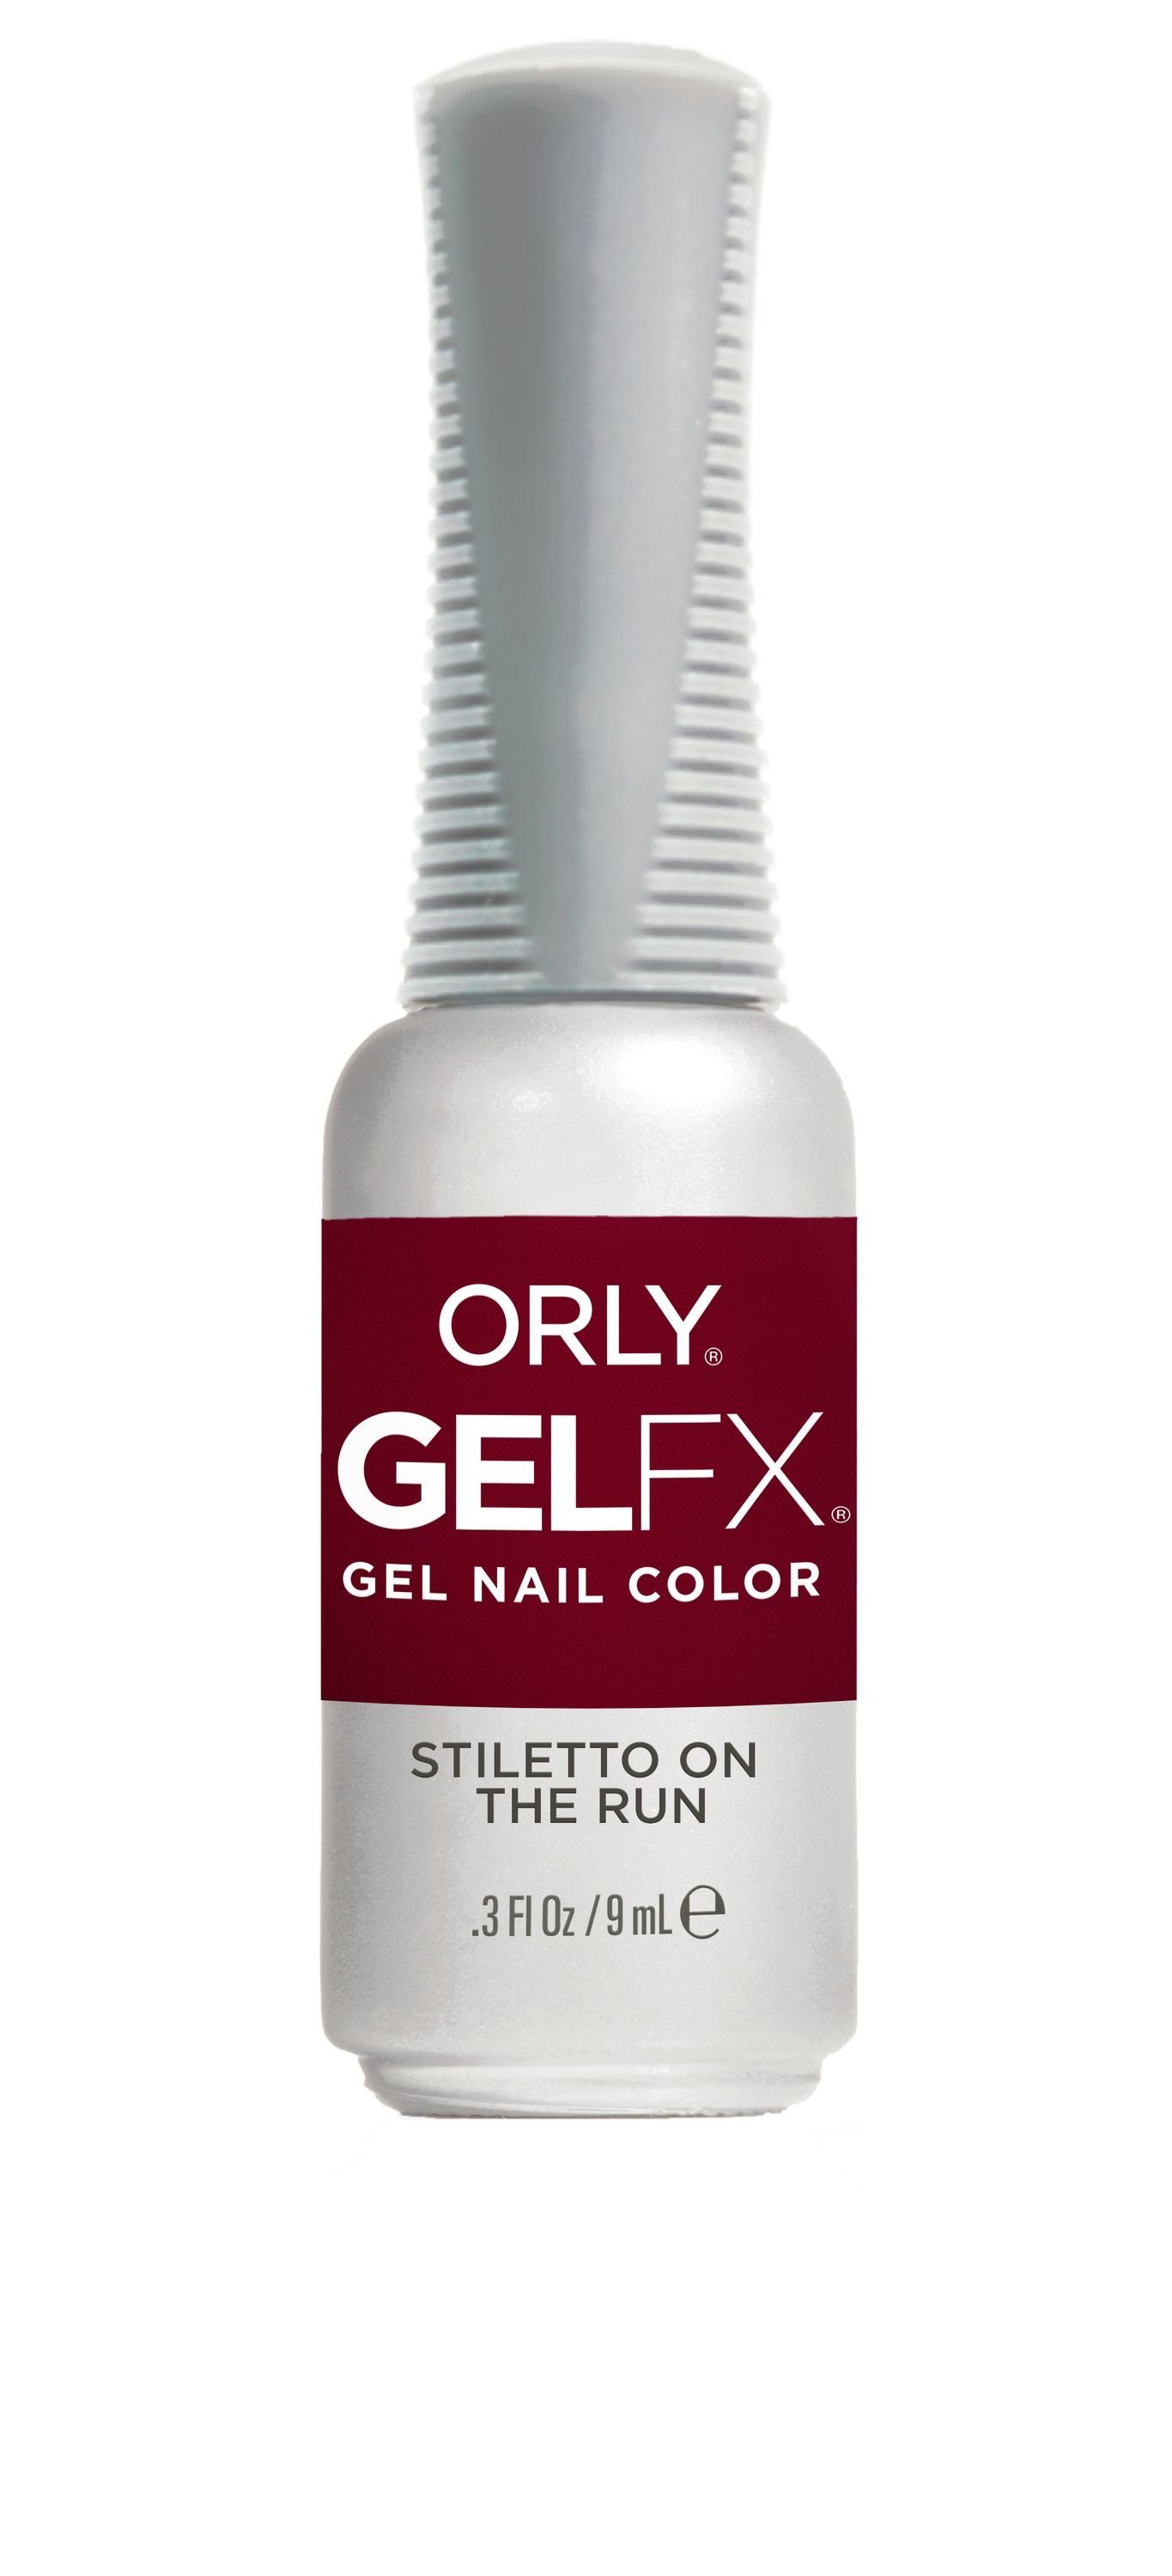 ORLY UV-Nagellack GEL FX Stiletto on the Run, 9ML | Nagellacke